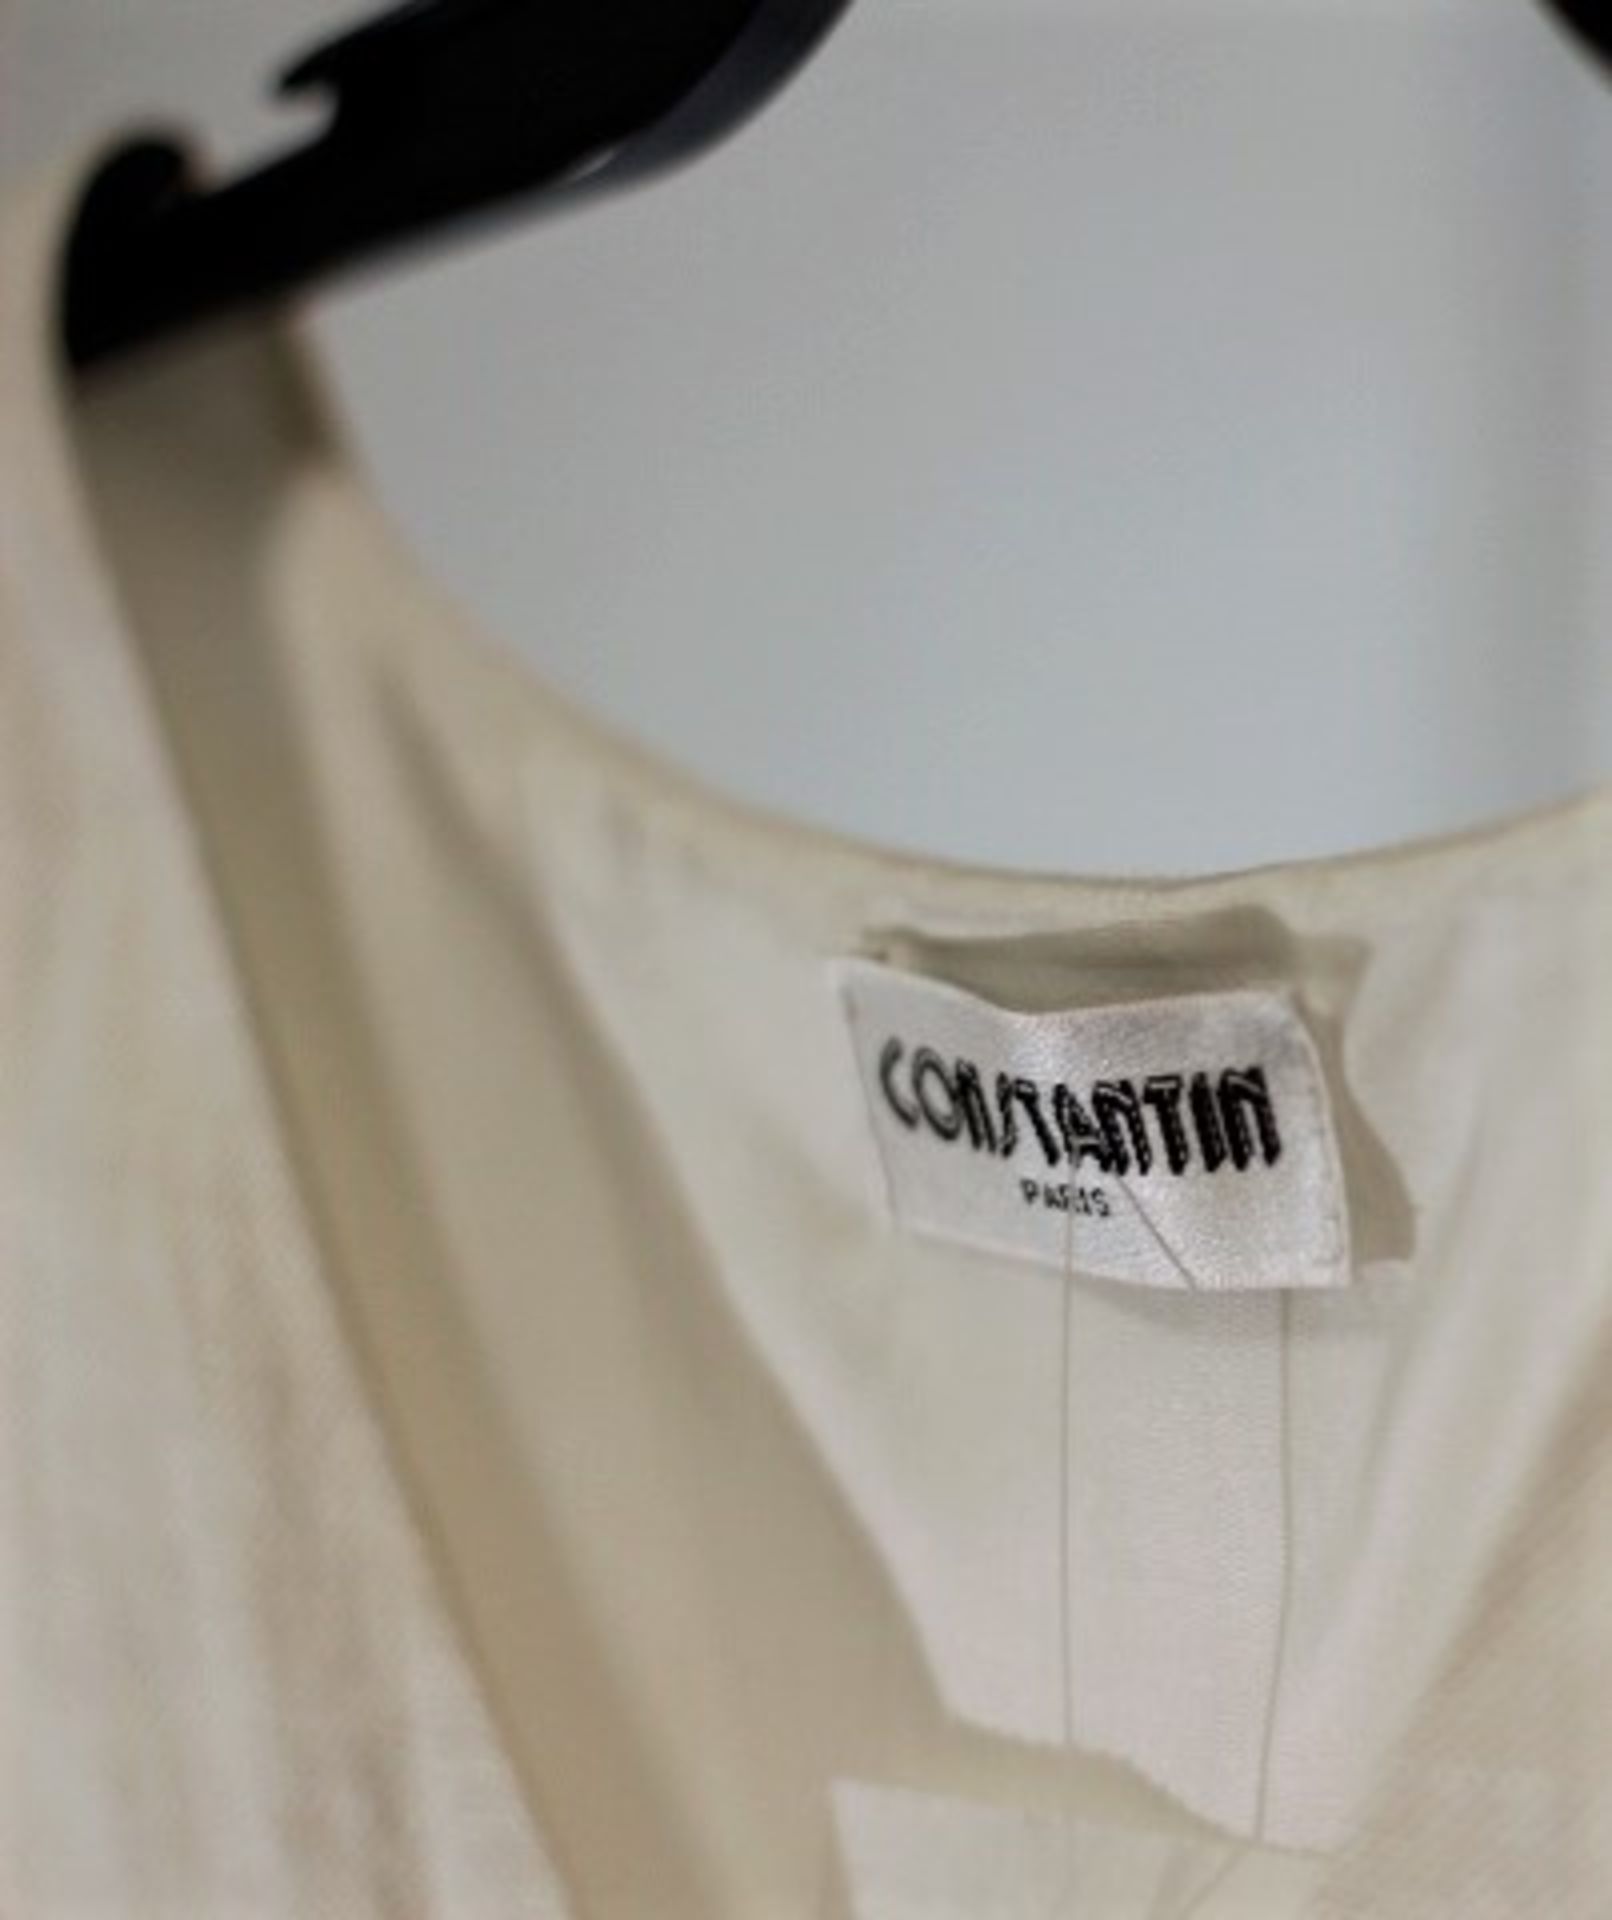 1 x Constantin Paris White Top - Size: 24 - Material: Acetate, Acrylic, Cotton, Fibre, Polyester, - Image 2 of 8